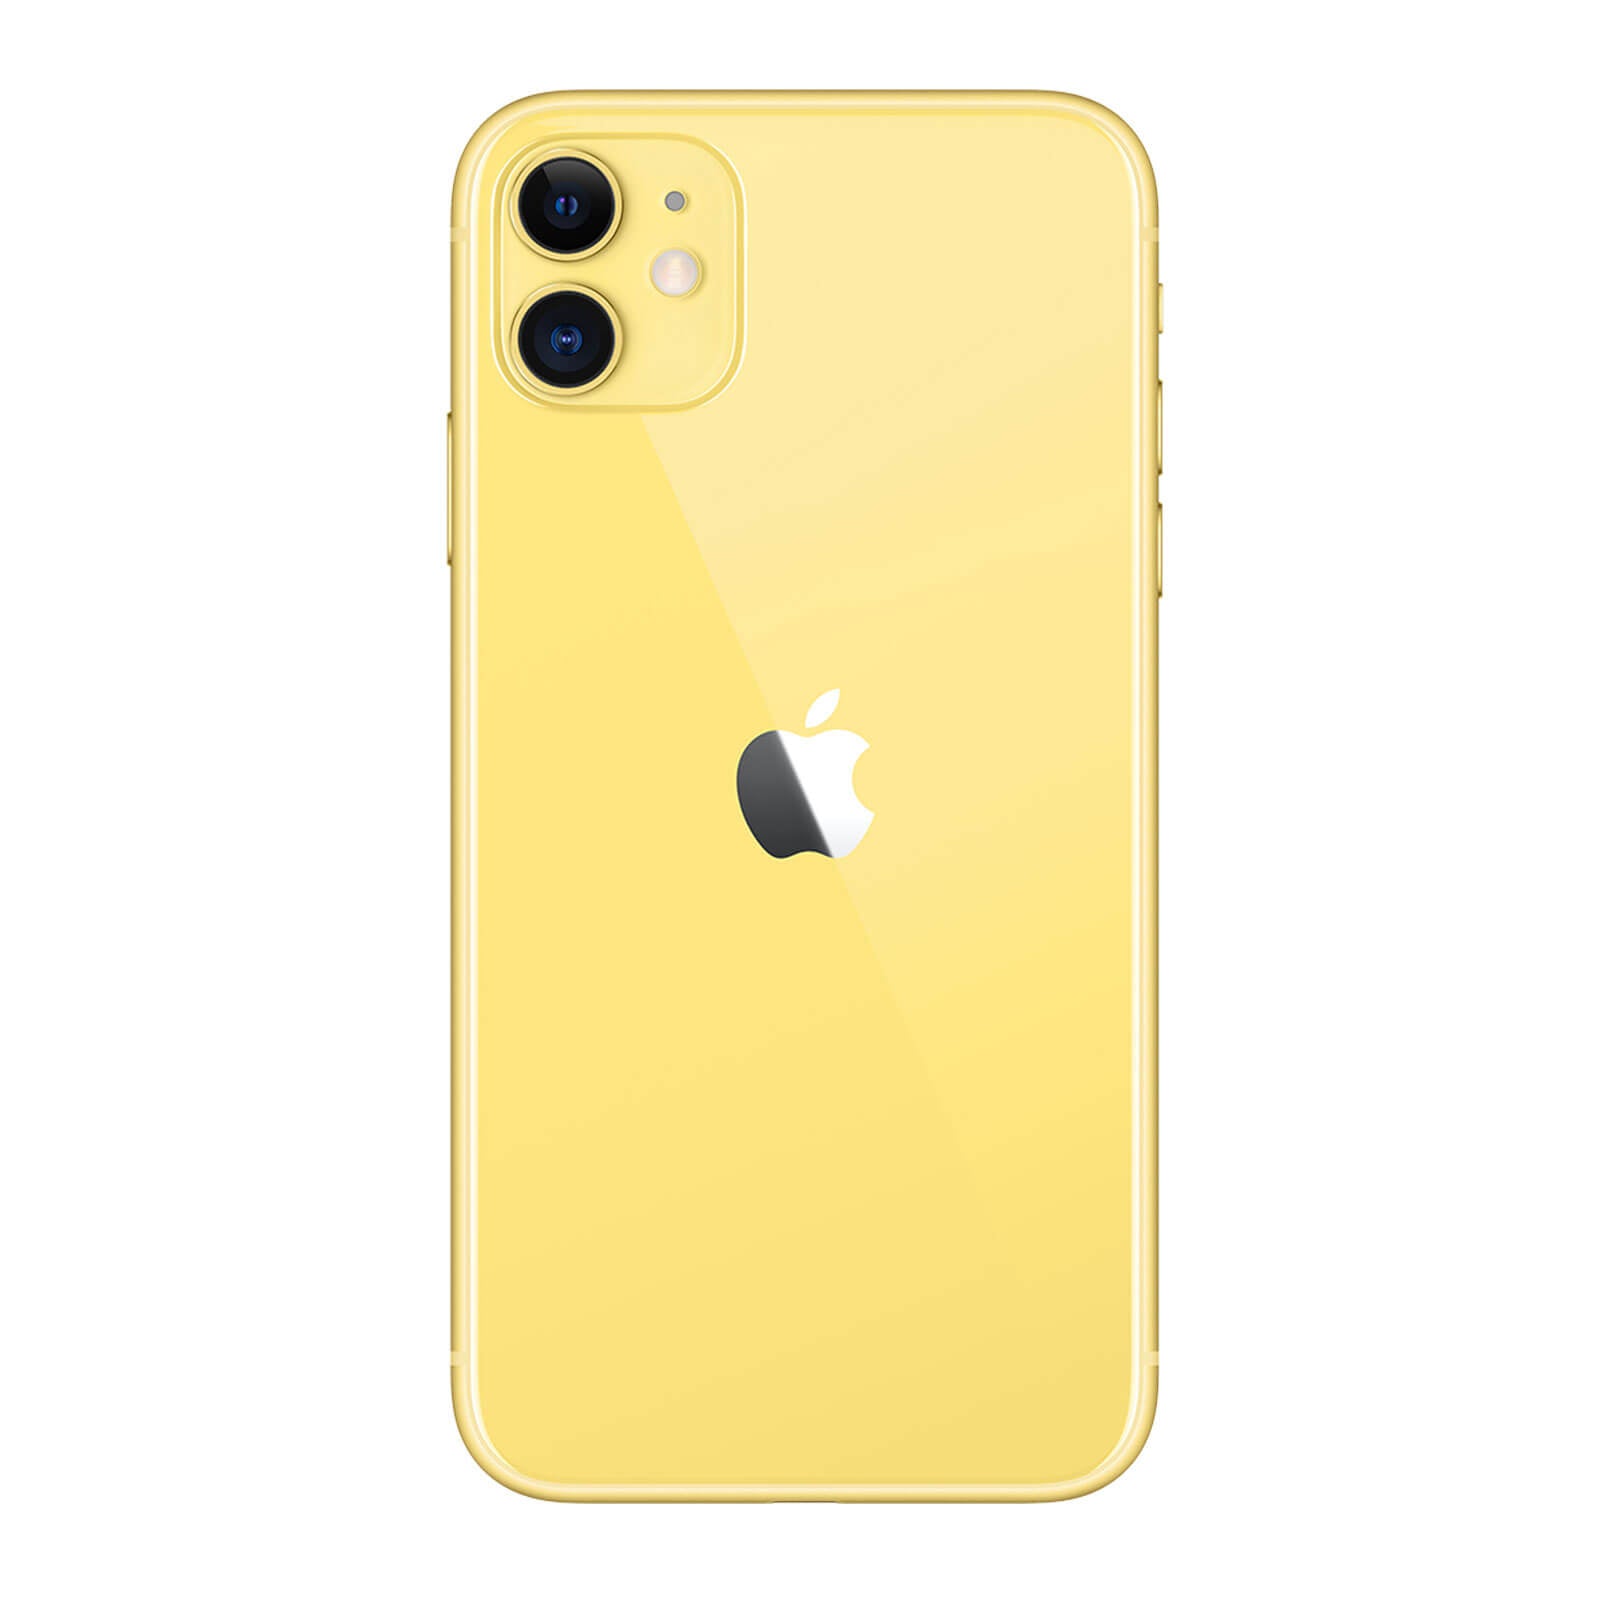 Apple iPhone 11 64GB Yellow Good - T-Mobile